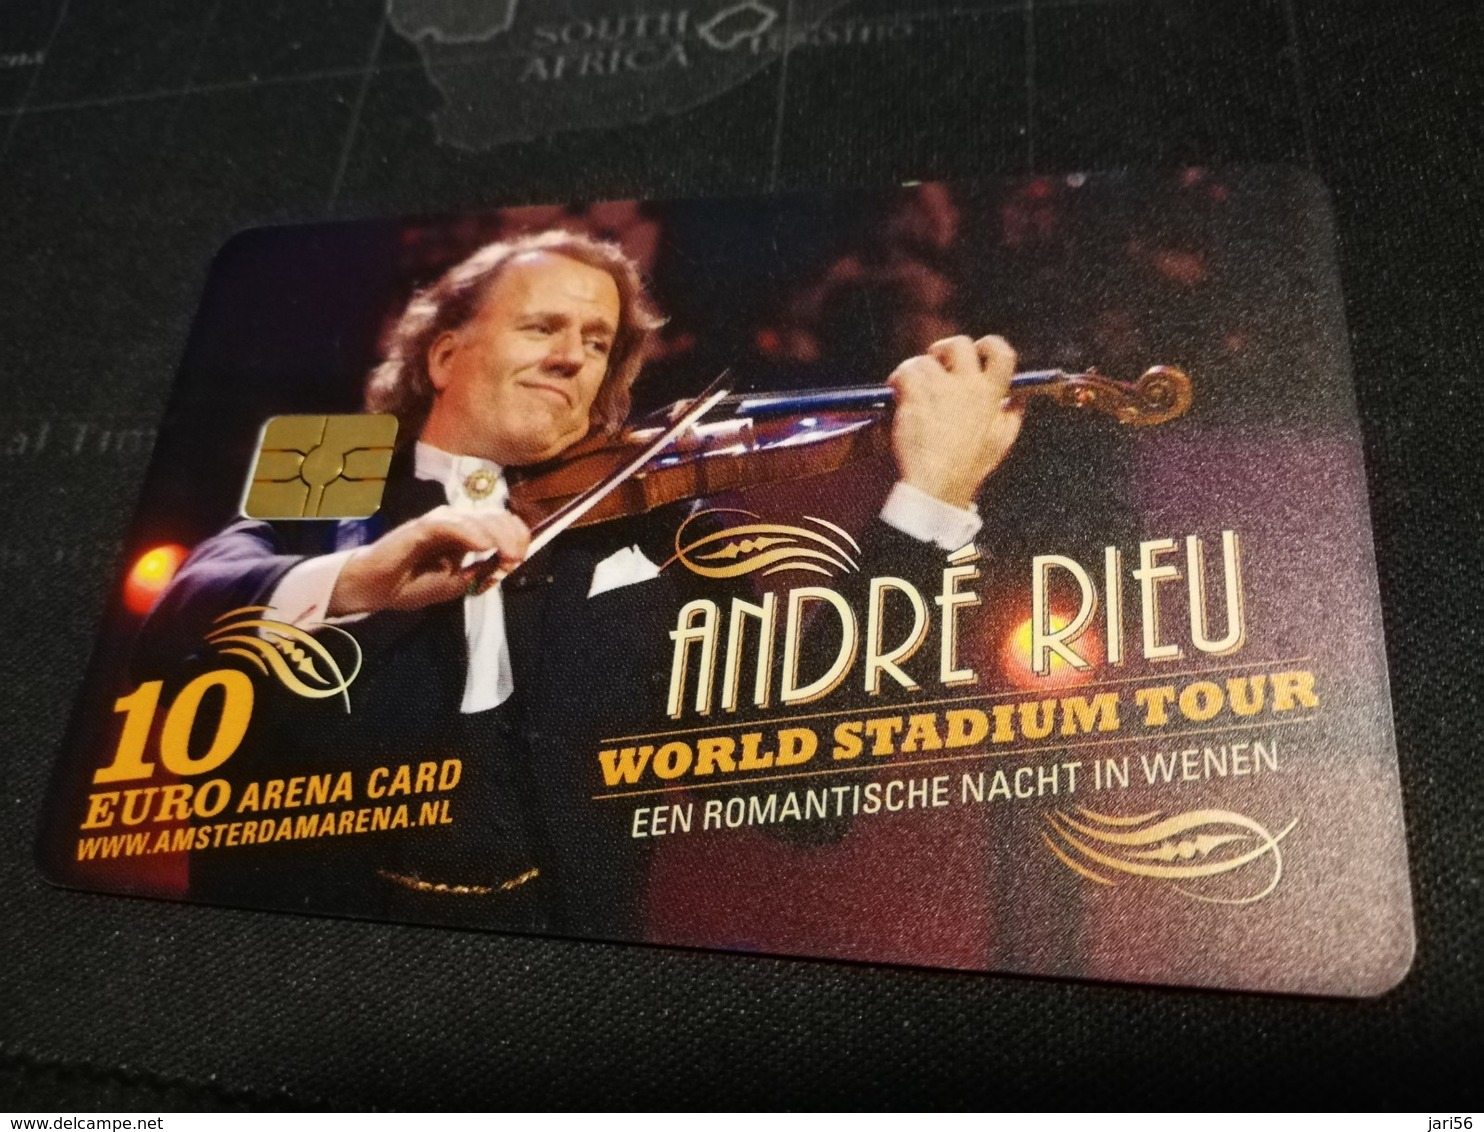 NETHERLANDS  ARENA CARD  ANDRE RIEU WORLD TOUR WENEN    €10,- USED CARD  ** 1424** - Openbaar